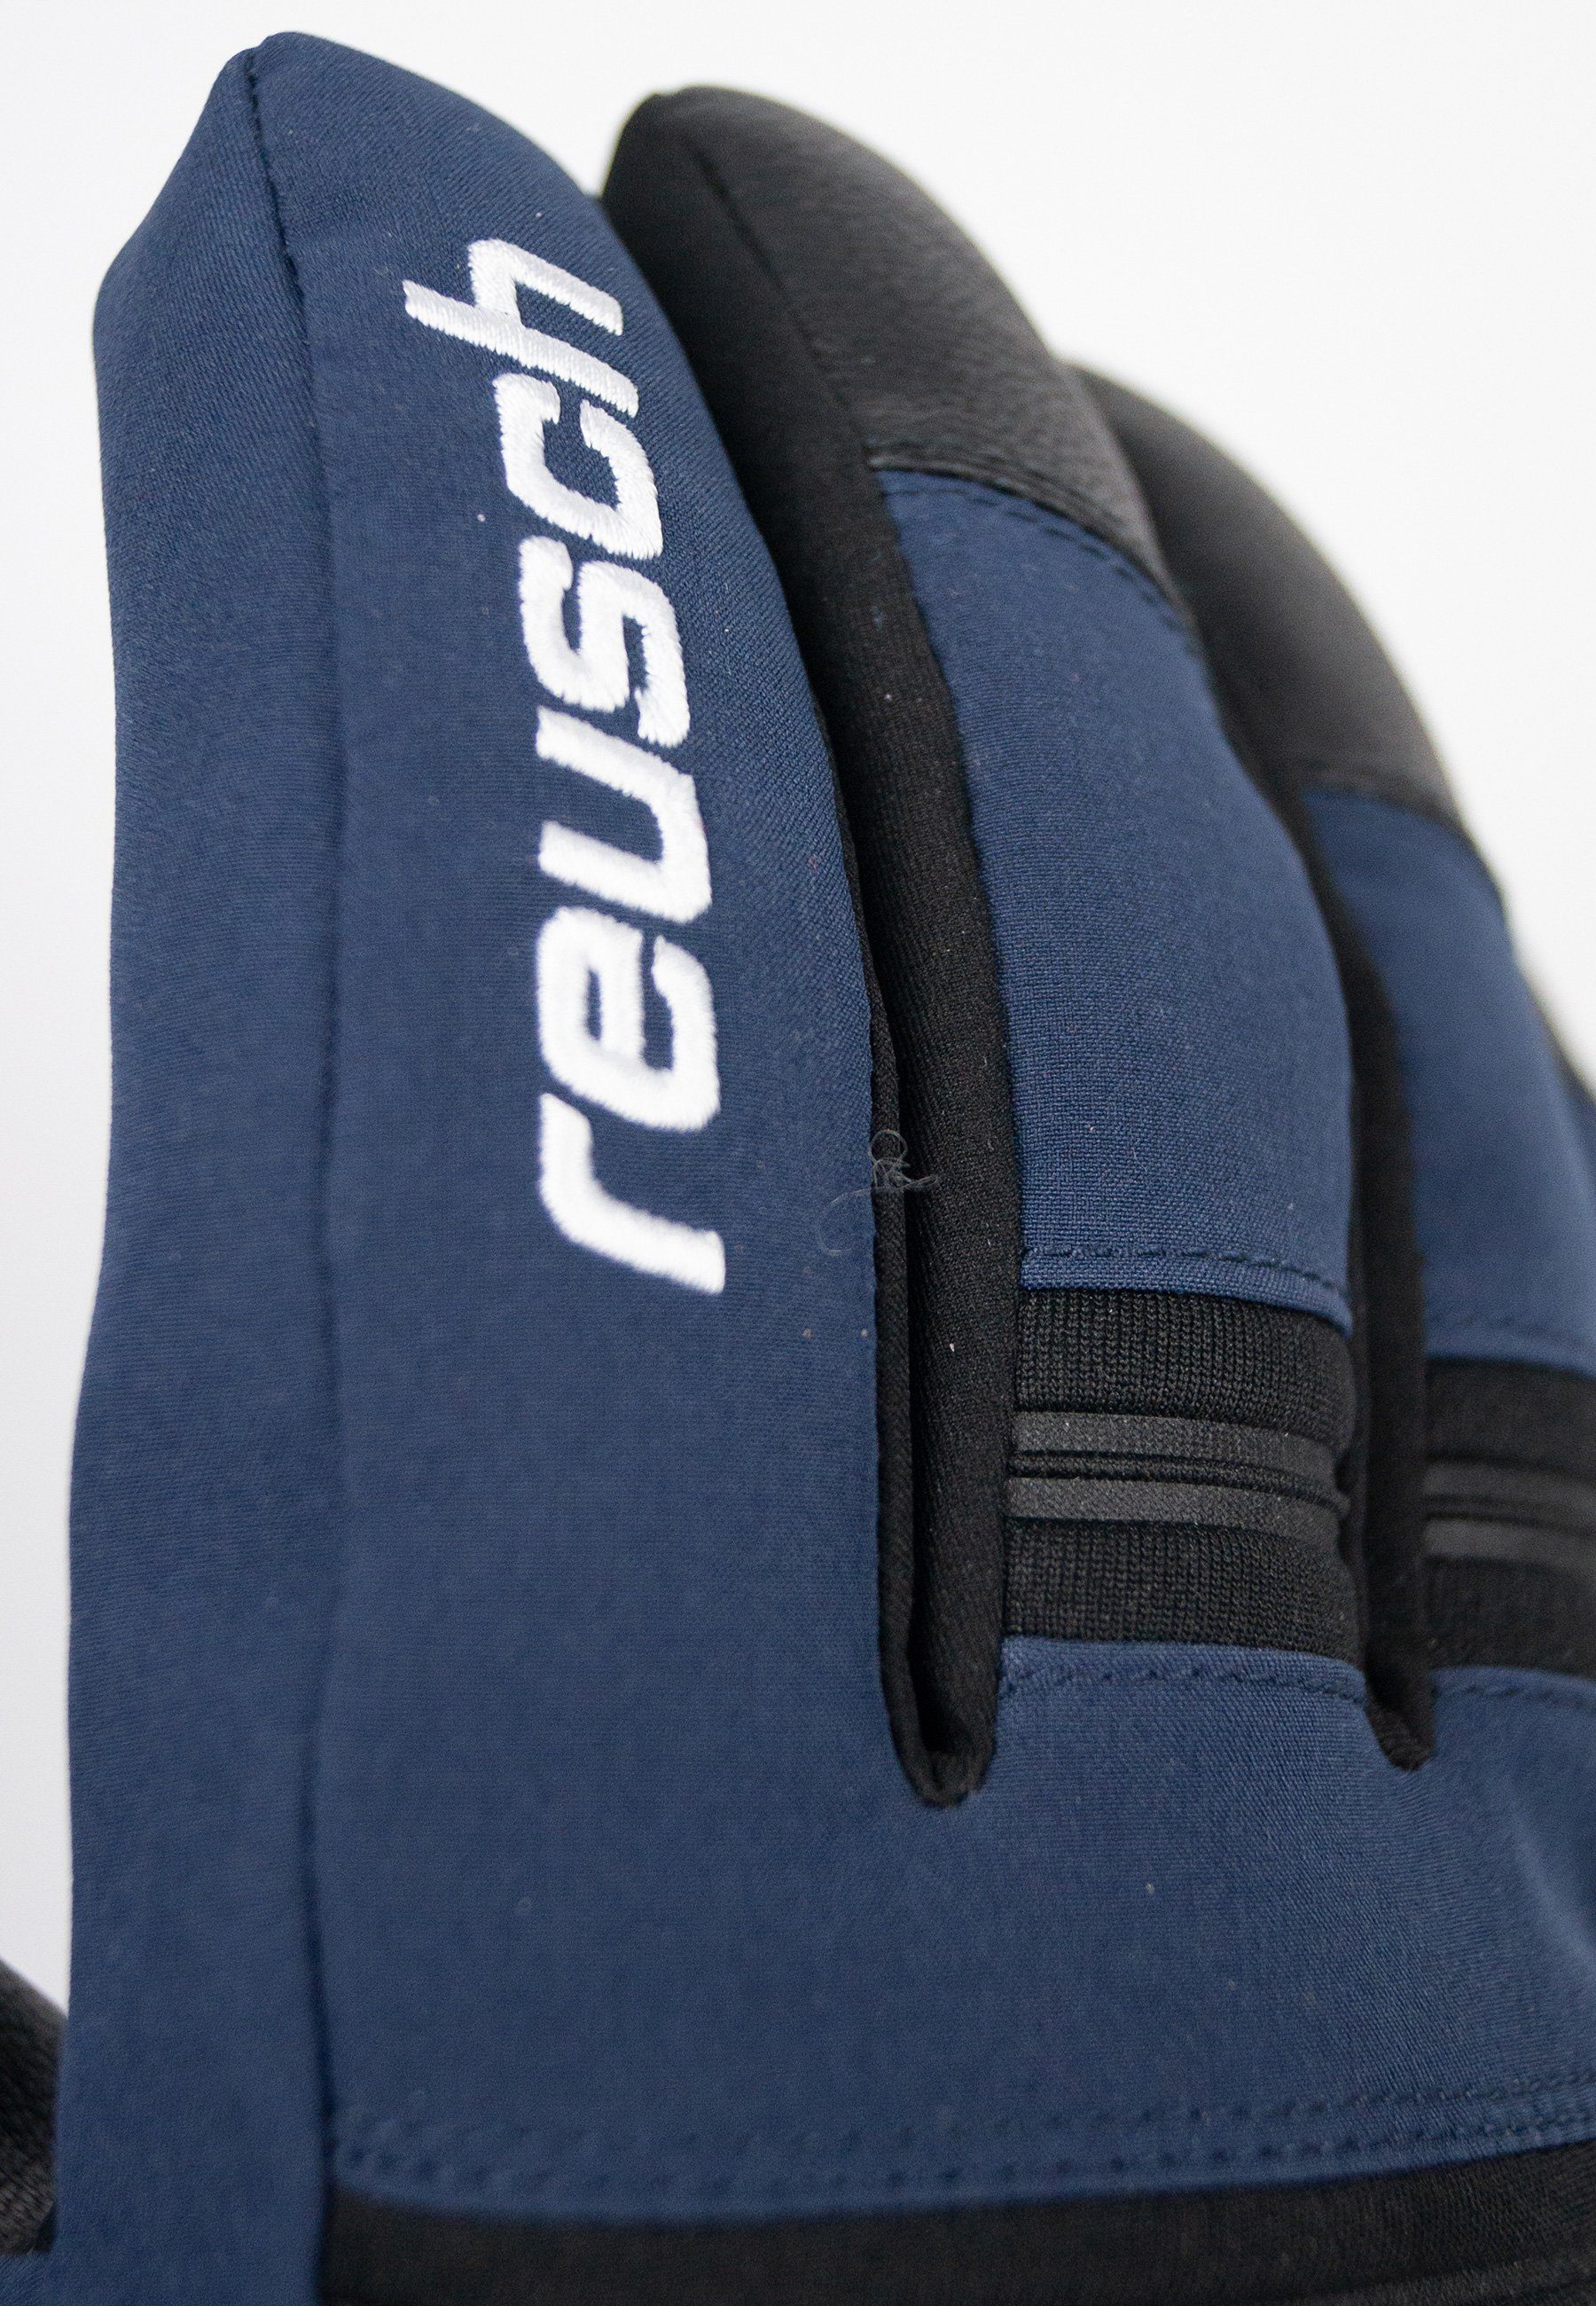 Reusch Skihandschuhe Kondor R-TEX® XT Design in und wasserdichtem blau-schwarz atmungsaktivem